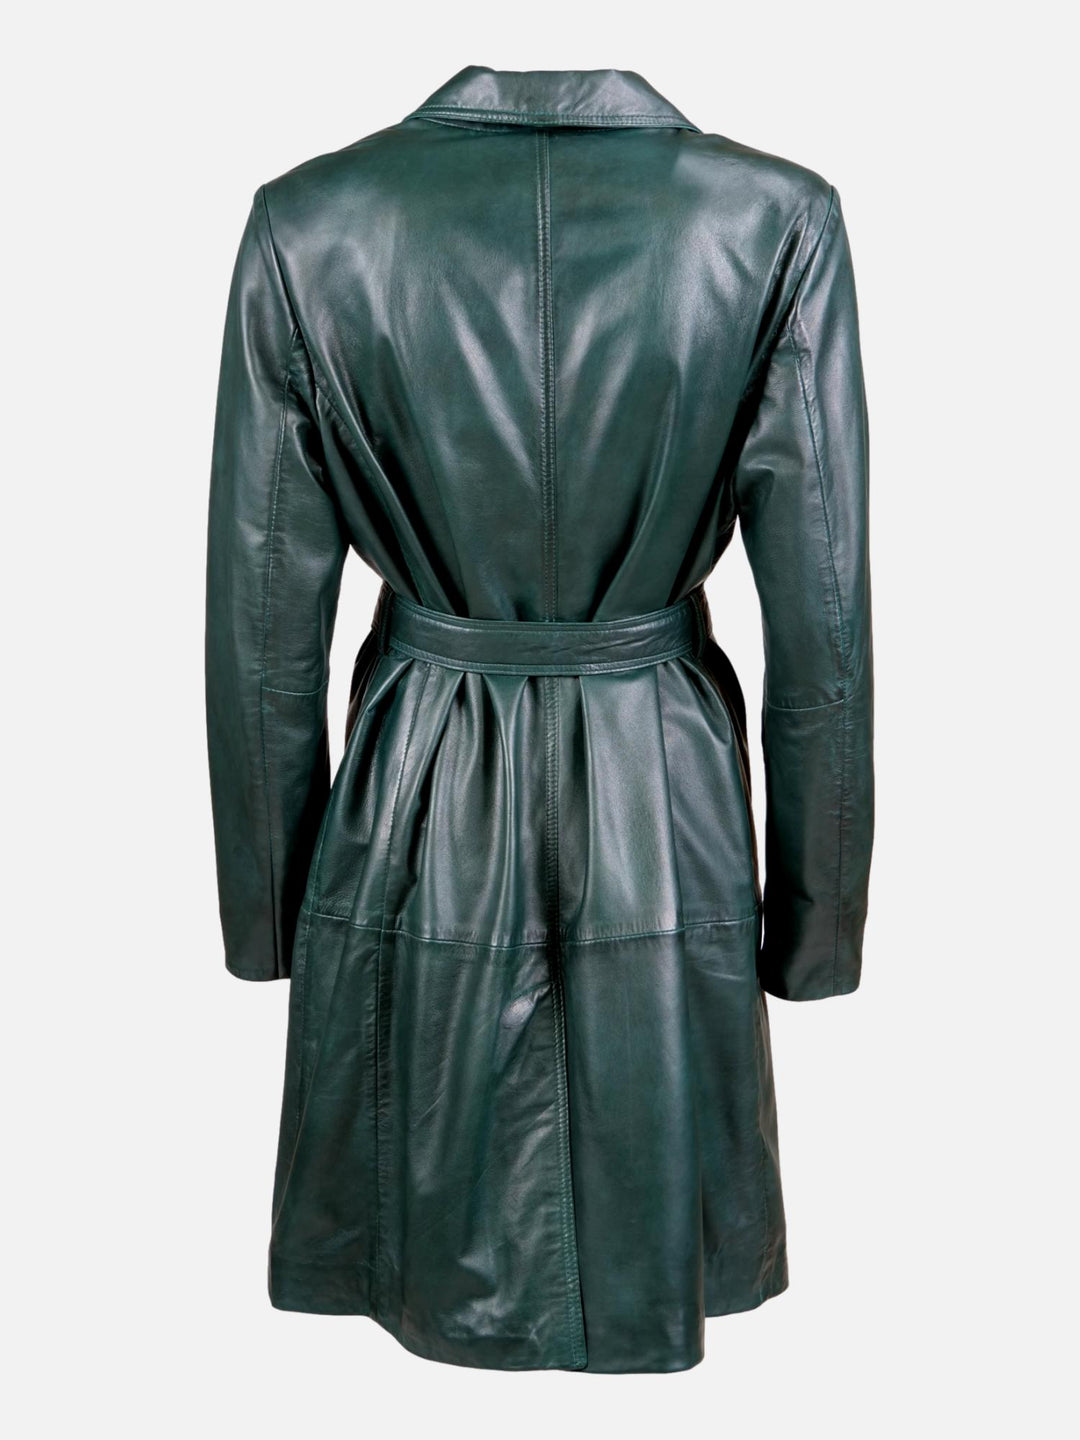 Big Amara copper grøn læderjakke / trench coat - dame